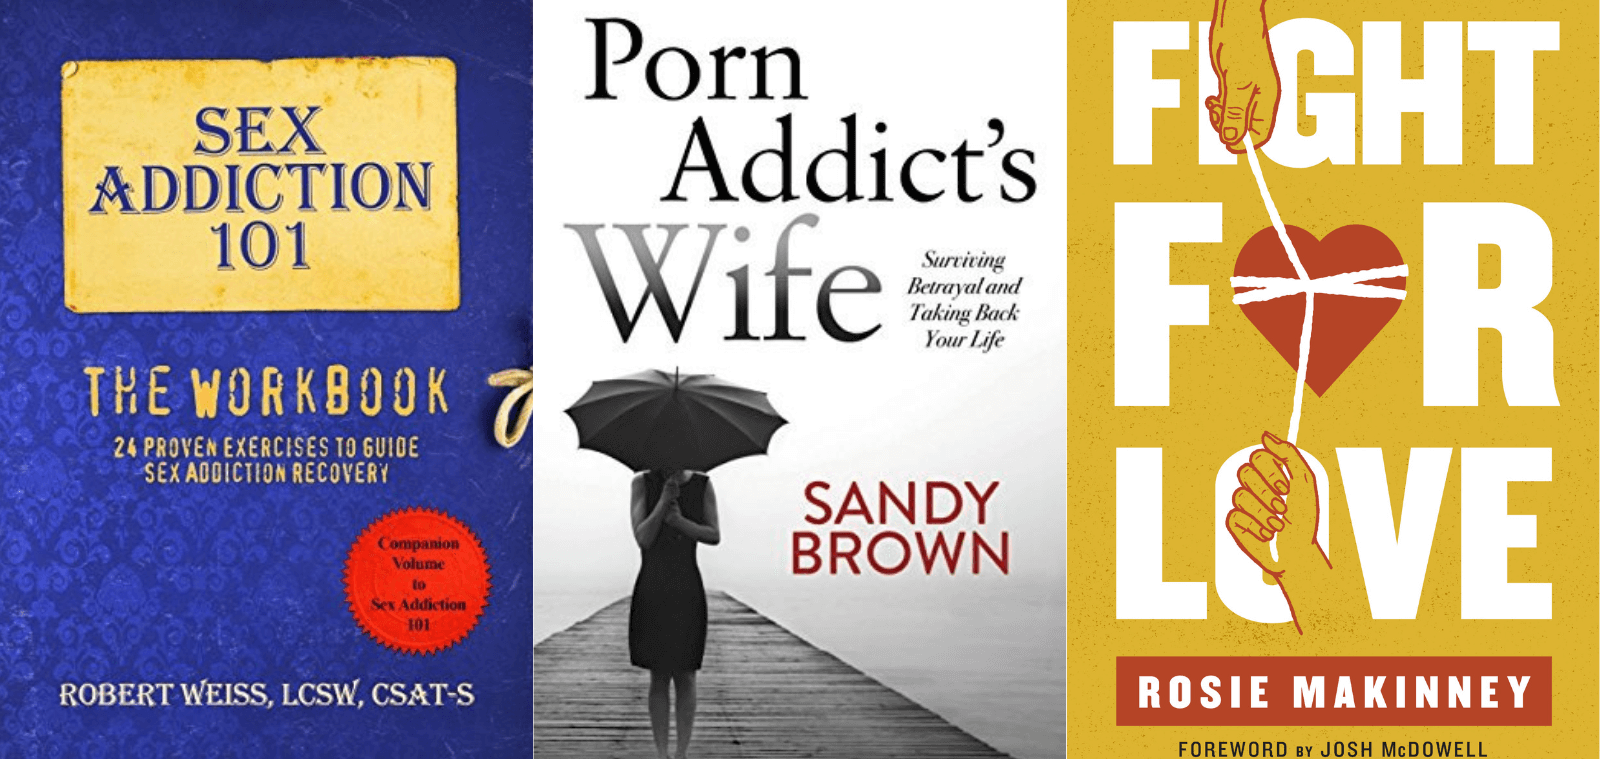 Best 10 Books On Porn Addiction